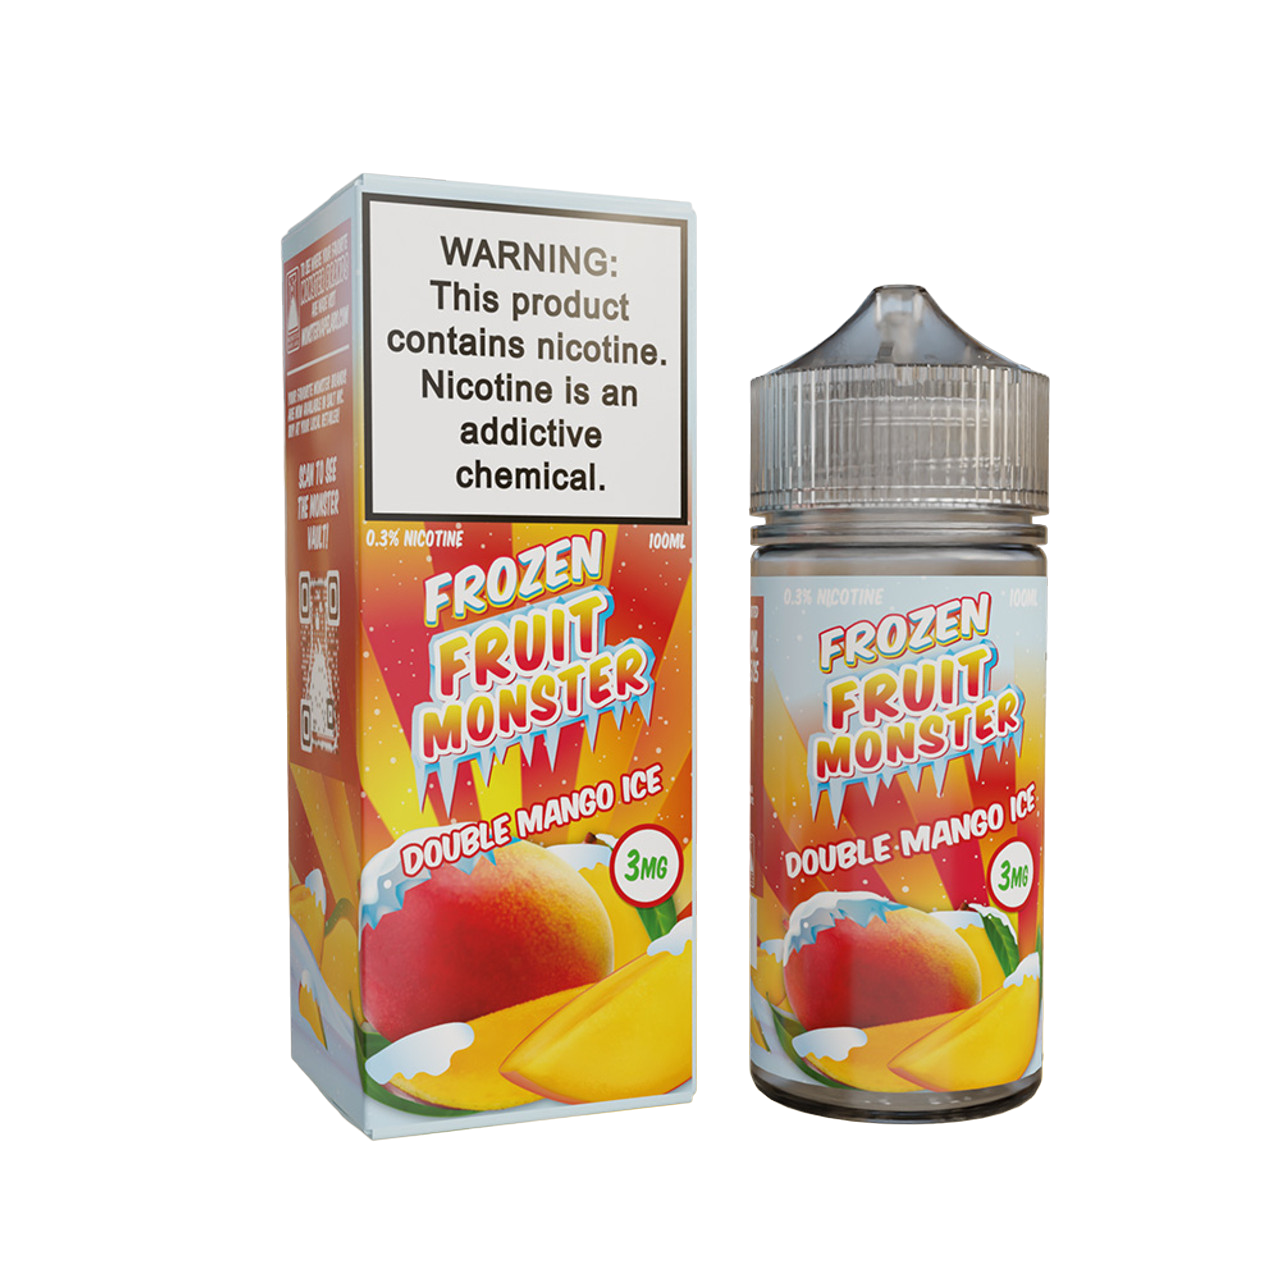 Frozen Fruit Monster Synthetic Nicotine E-Liquid 100ML - Double Mango Ice